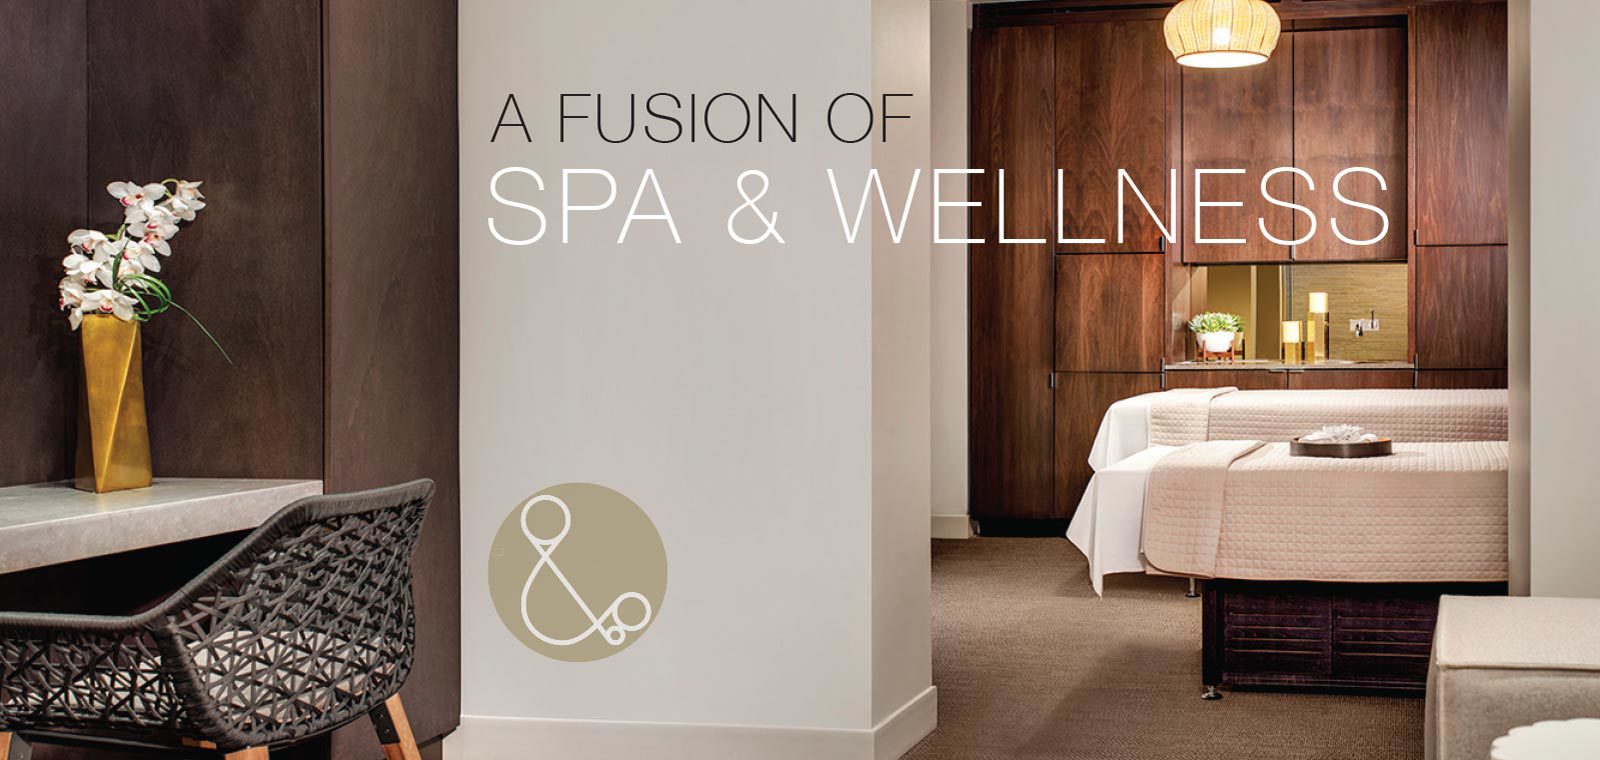 A fusion of spa & wellness